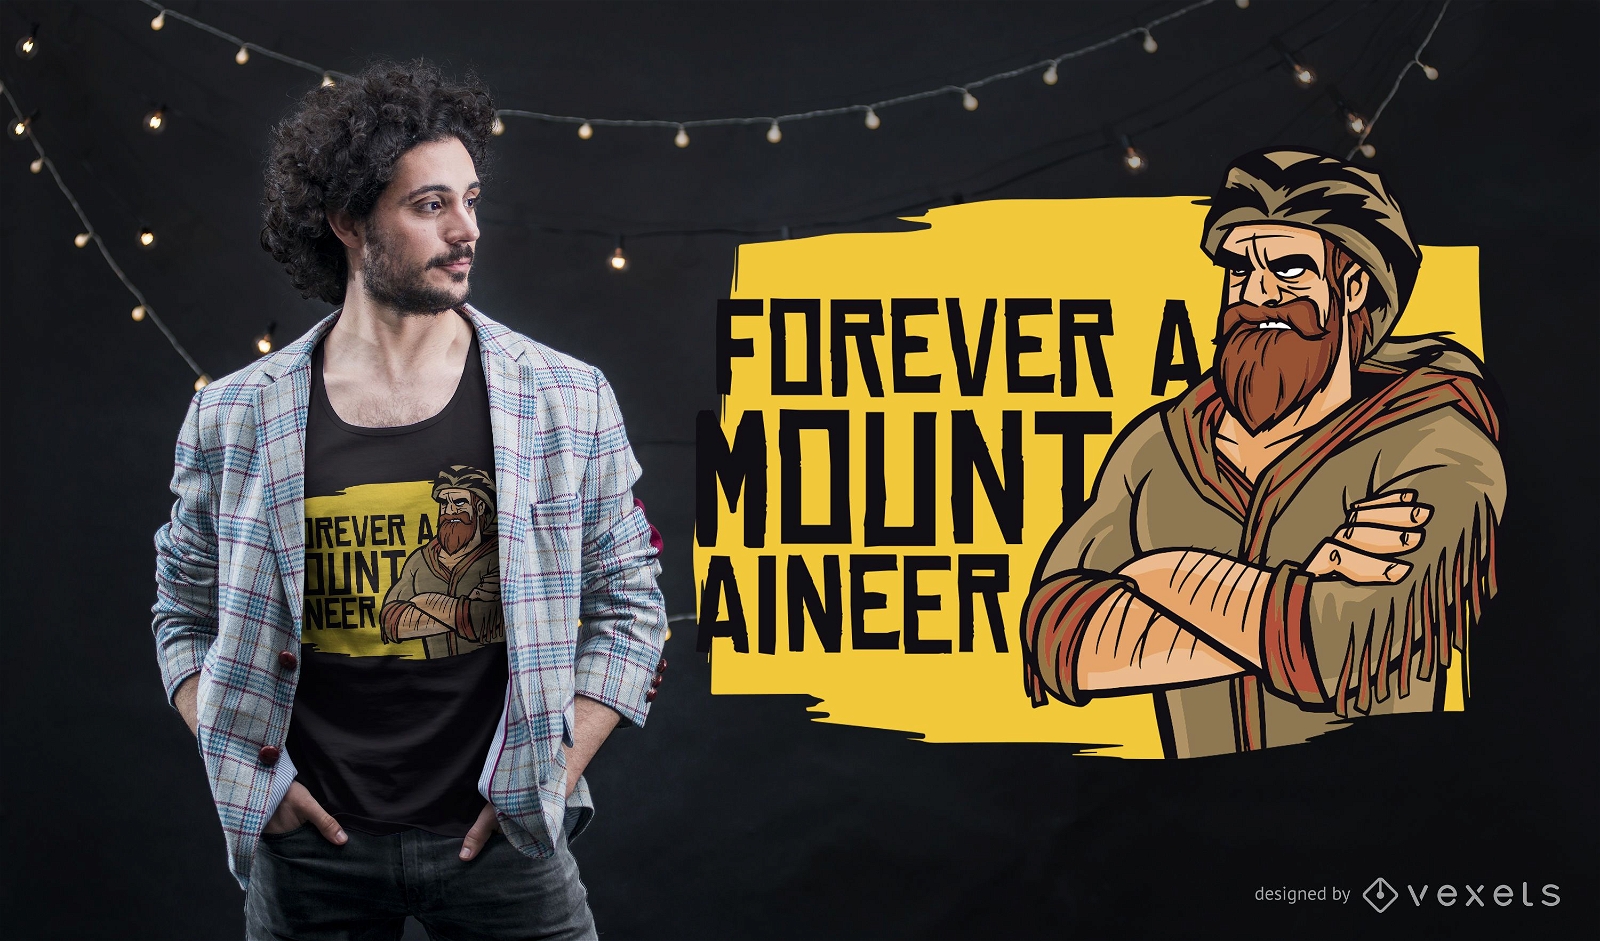 Forever mountaineer t-shirt design